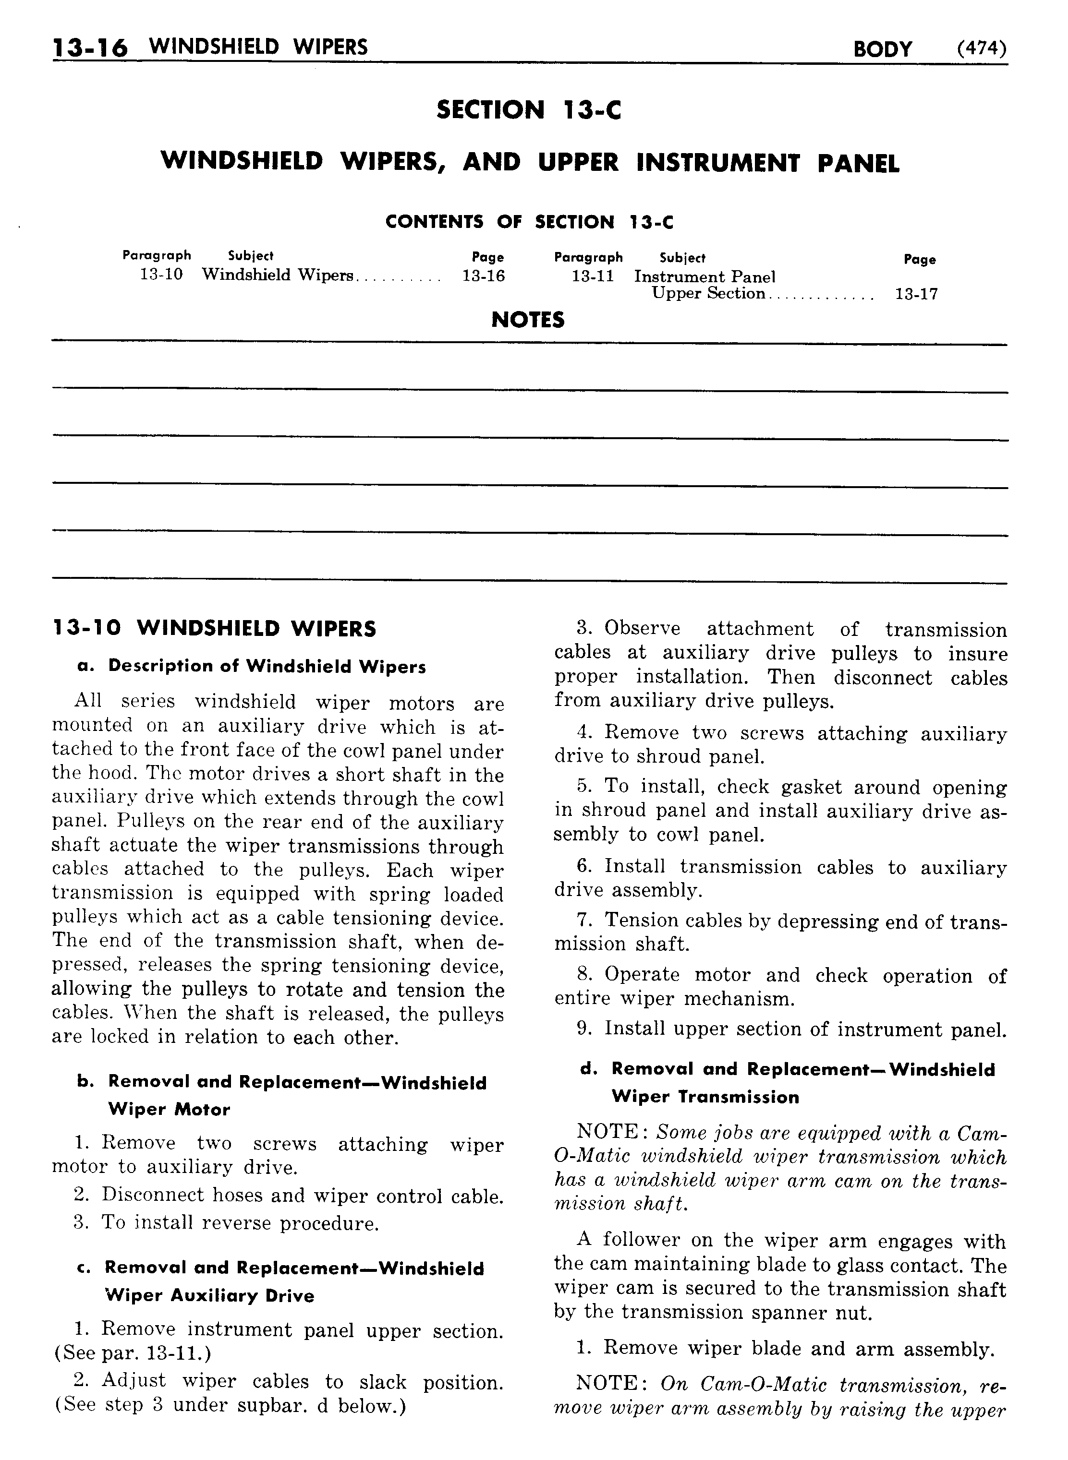 n_14 1956 Buick Shop Manual - Body-016-016.jpg